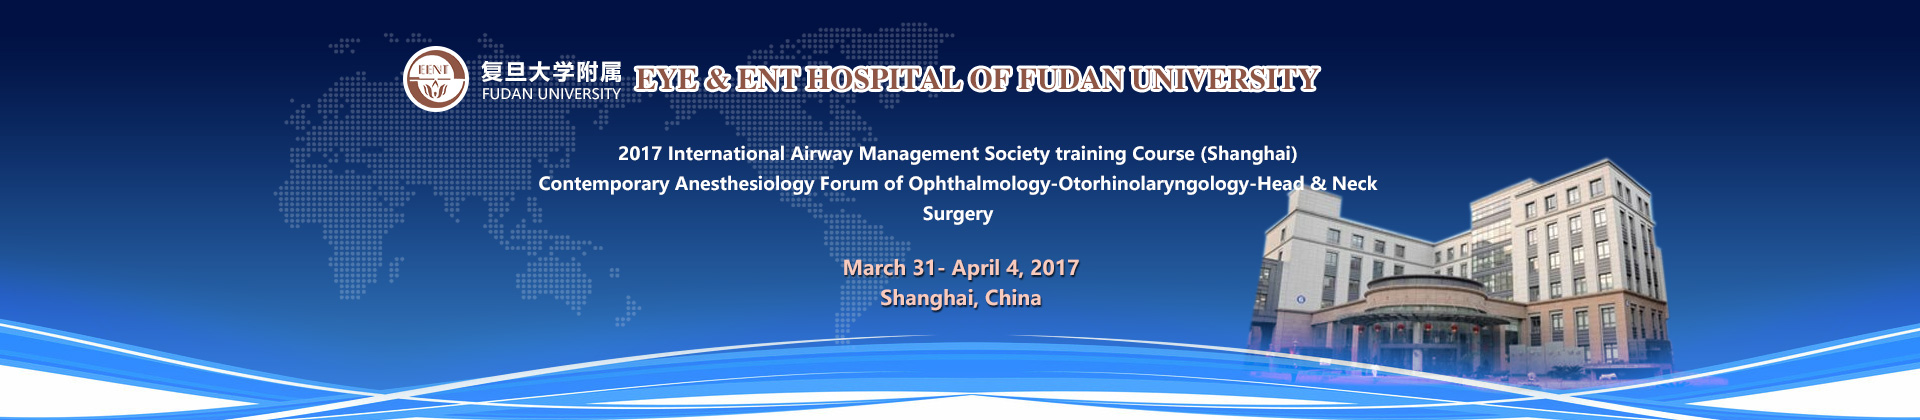 2017 International Airway Management Society (IAMS) Training Course (Shanghai)